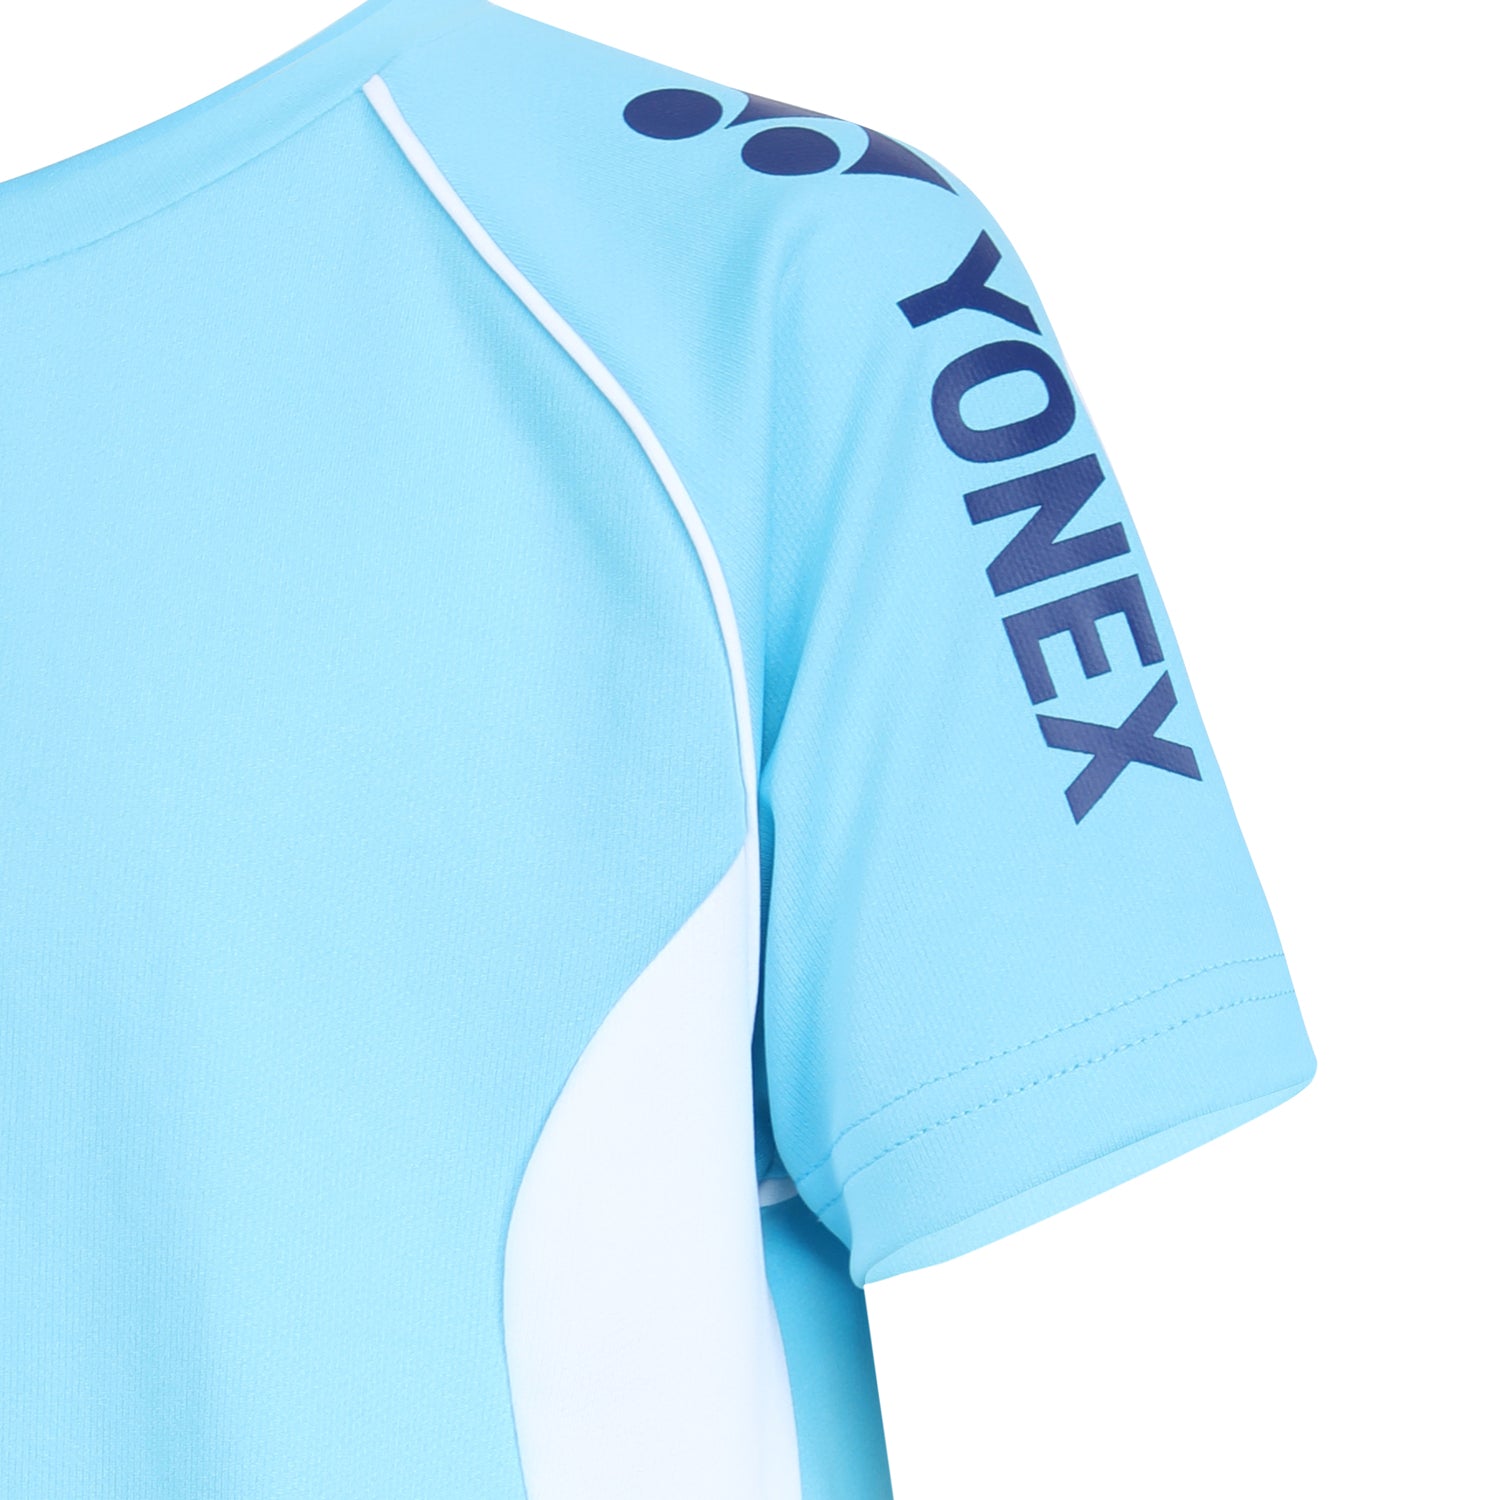 Yonex 1594 Round Neck T-Shirt and Short set for Junior, Blue Atoll - Best Price online Prokicksports.com